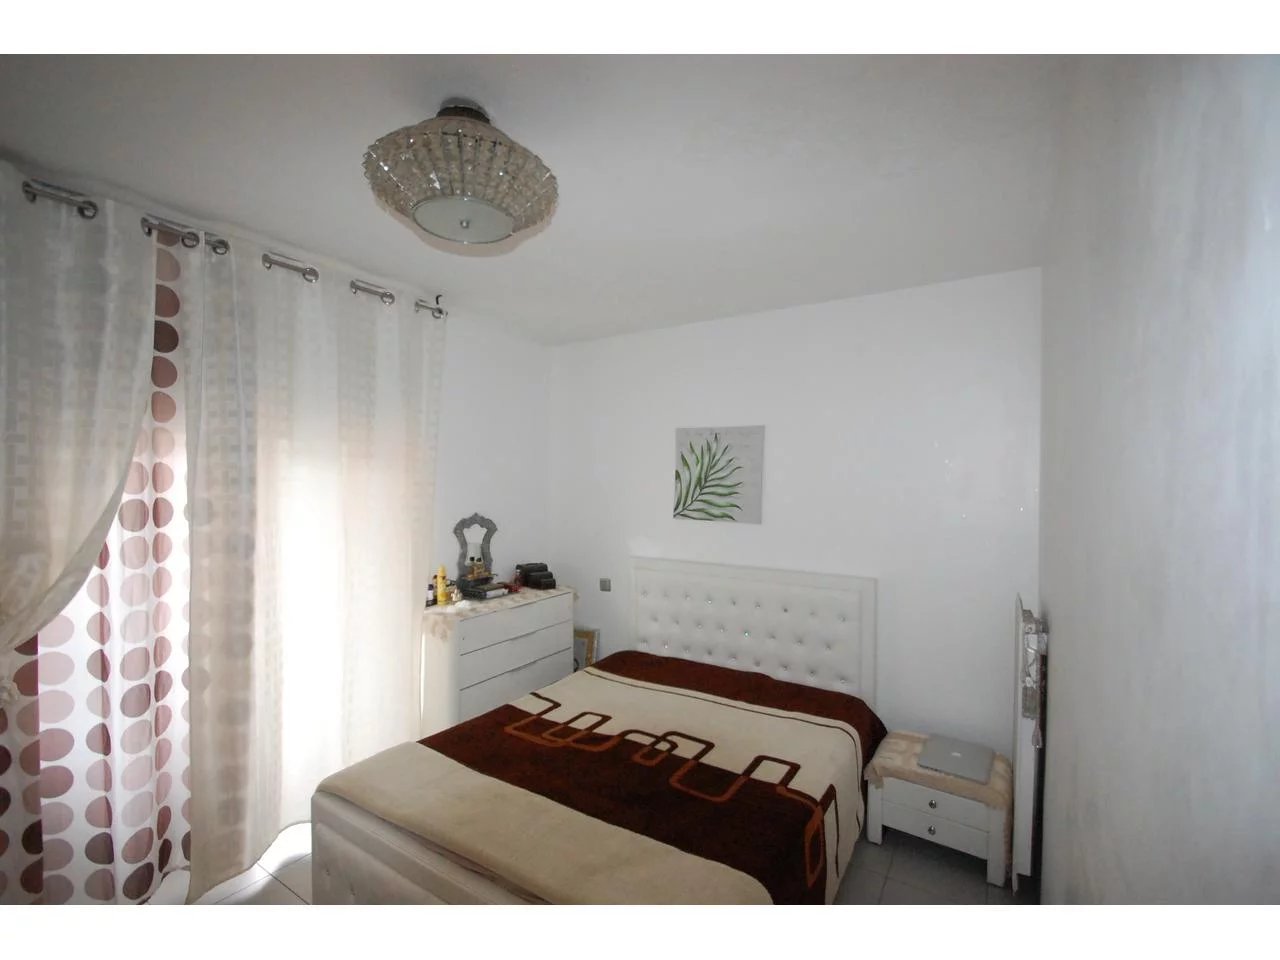 Appartement  3 Locali 67.54m2  In vendita   225 000 €